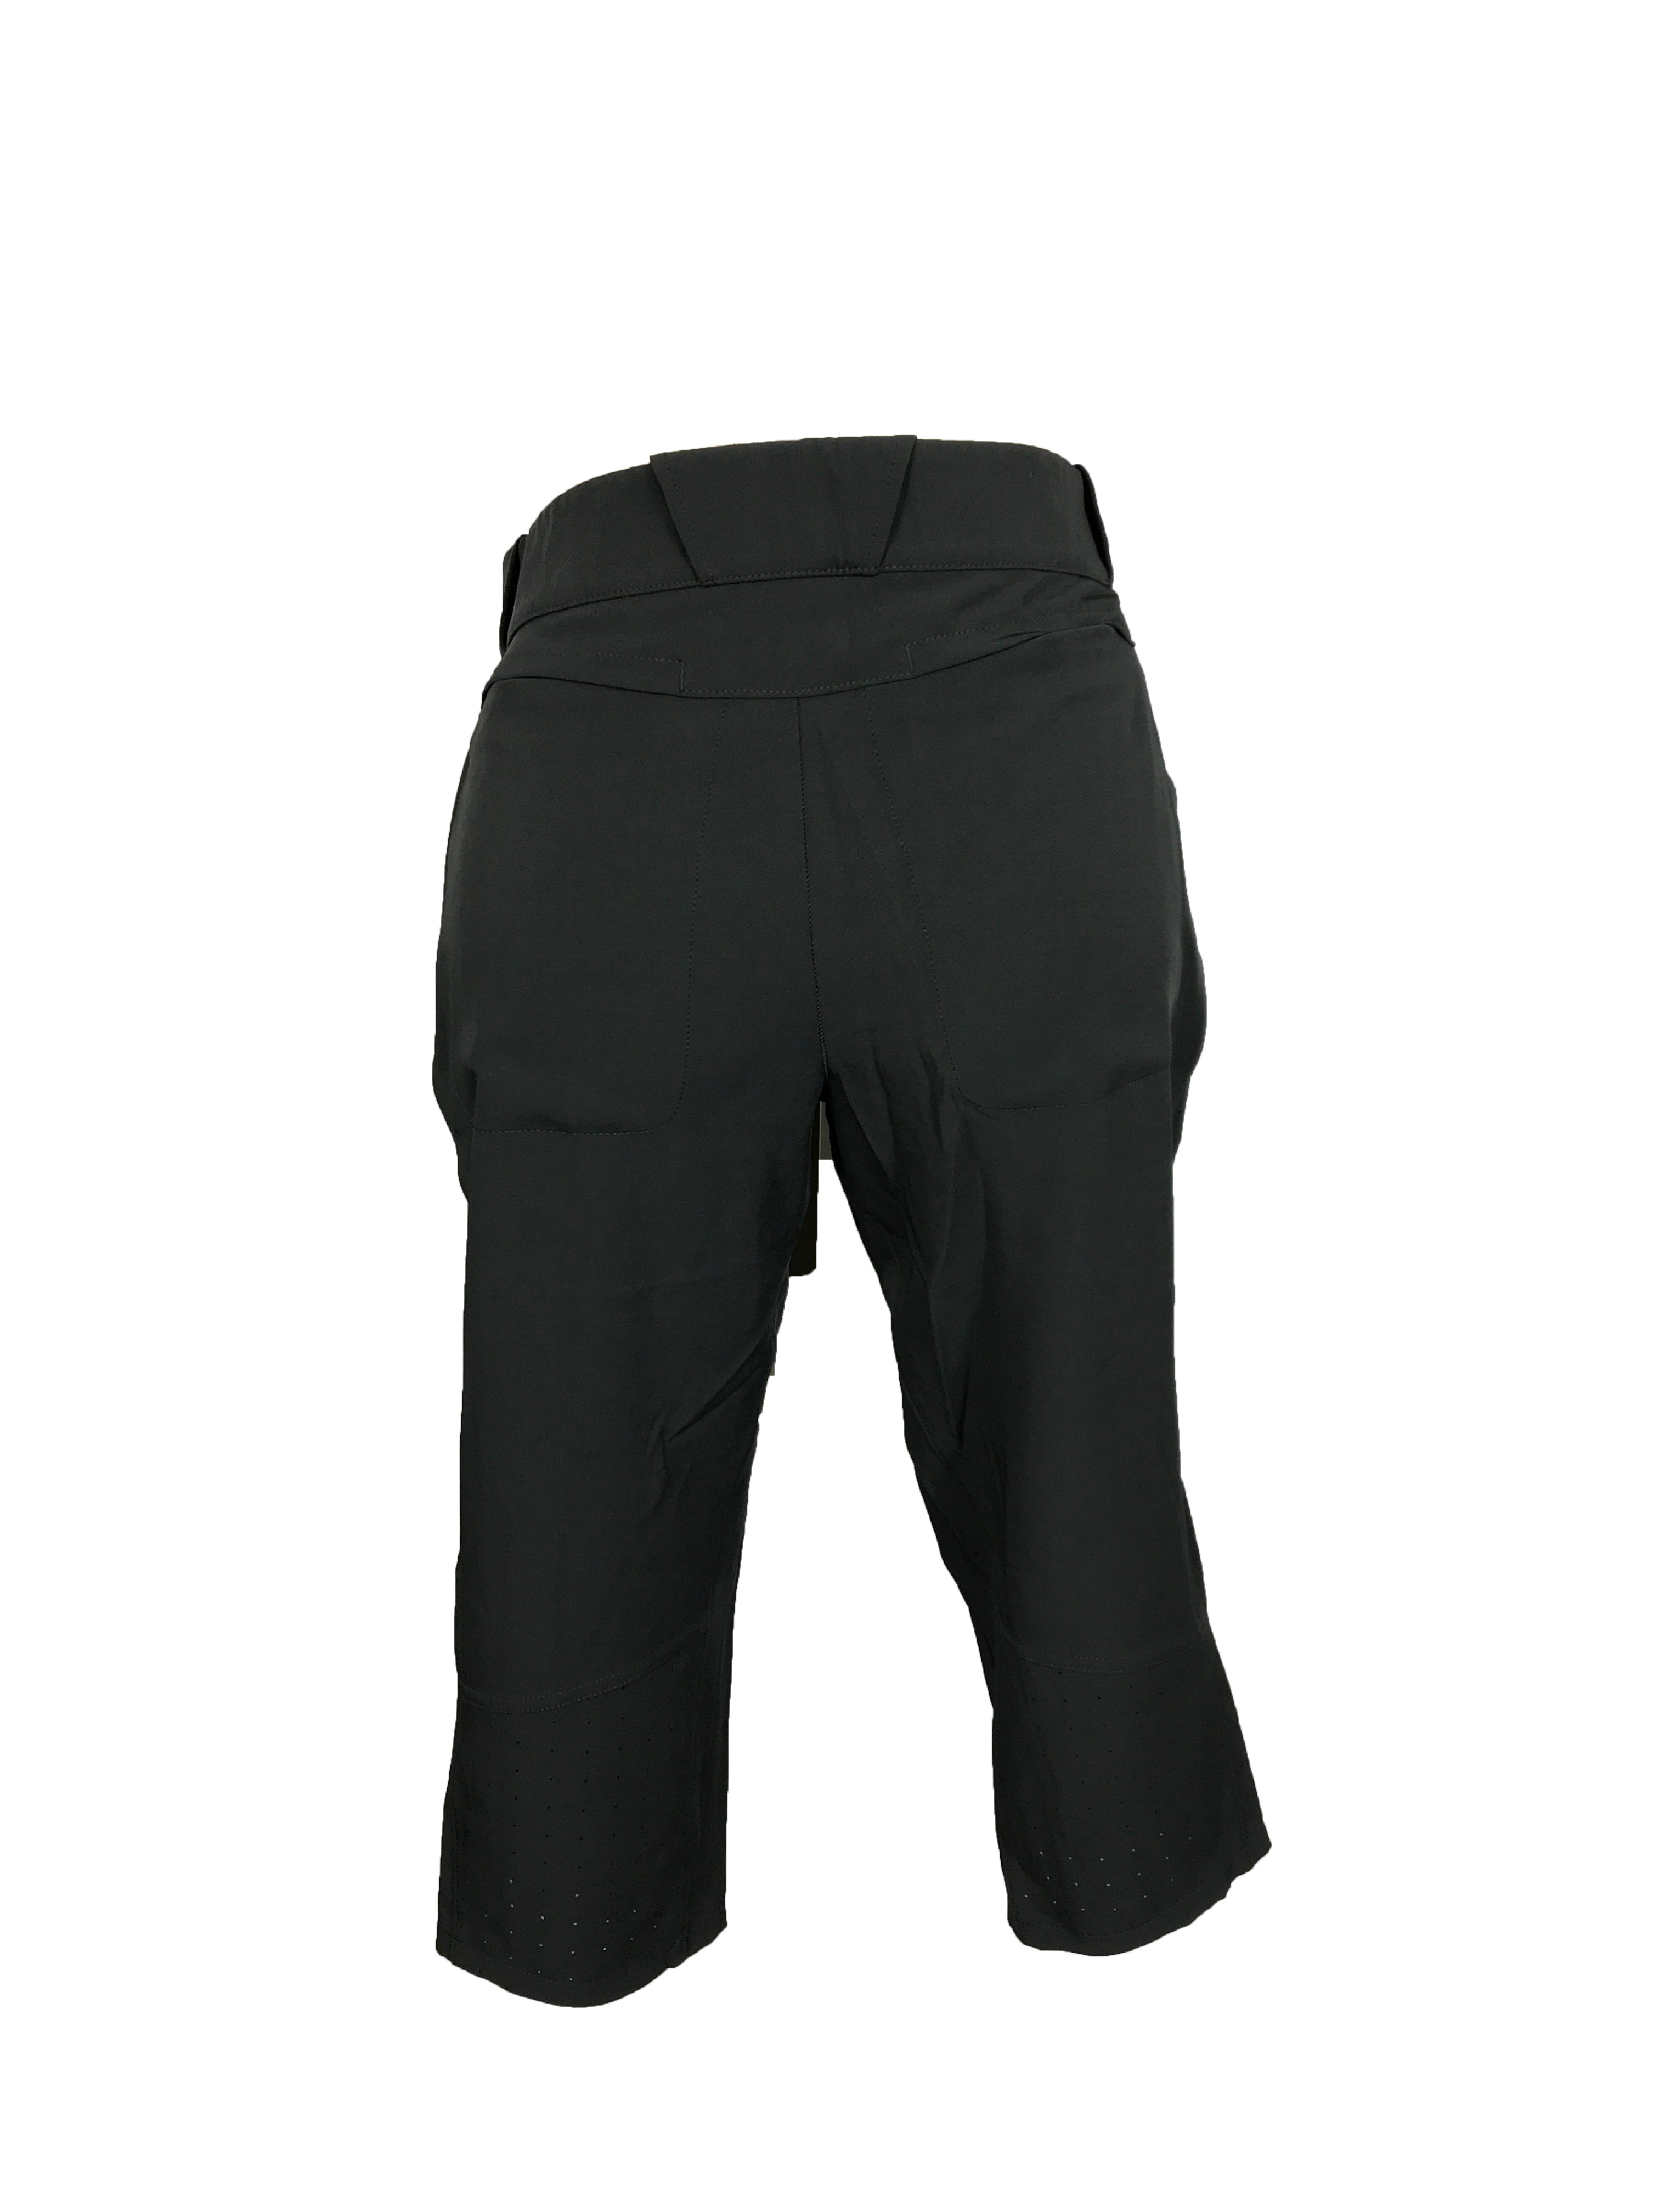 Nike x Michigan State Grey Softball Capri Pants Women's Size XL L+4